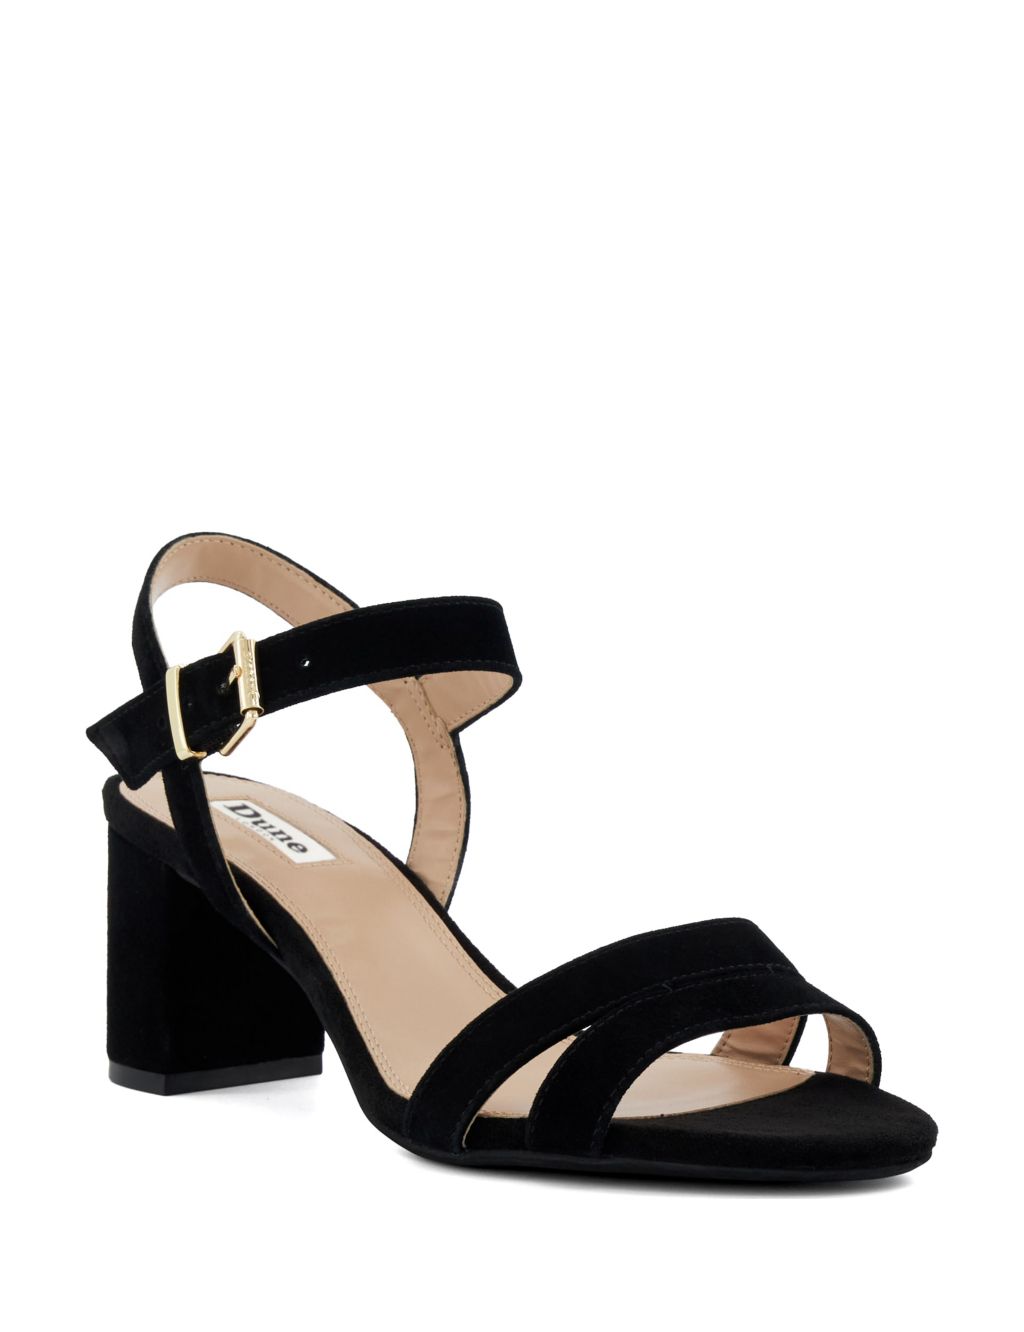 Glitter Ankle Strap Block Heel Sandals | Dune London | M&S